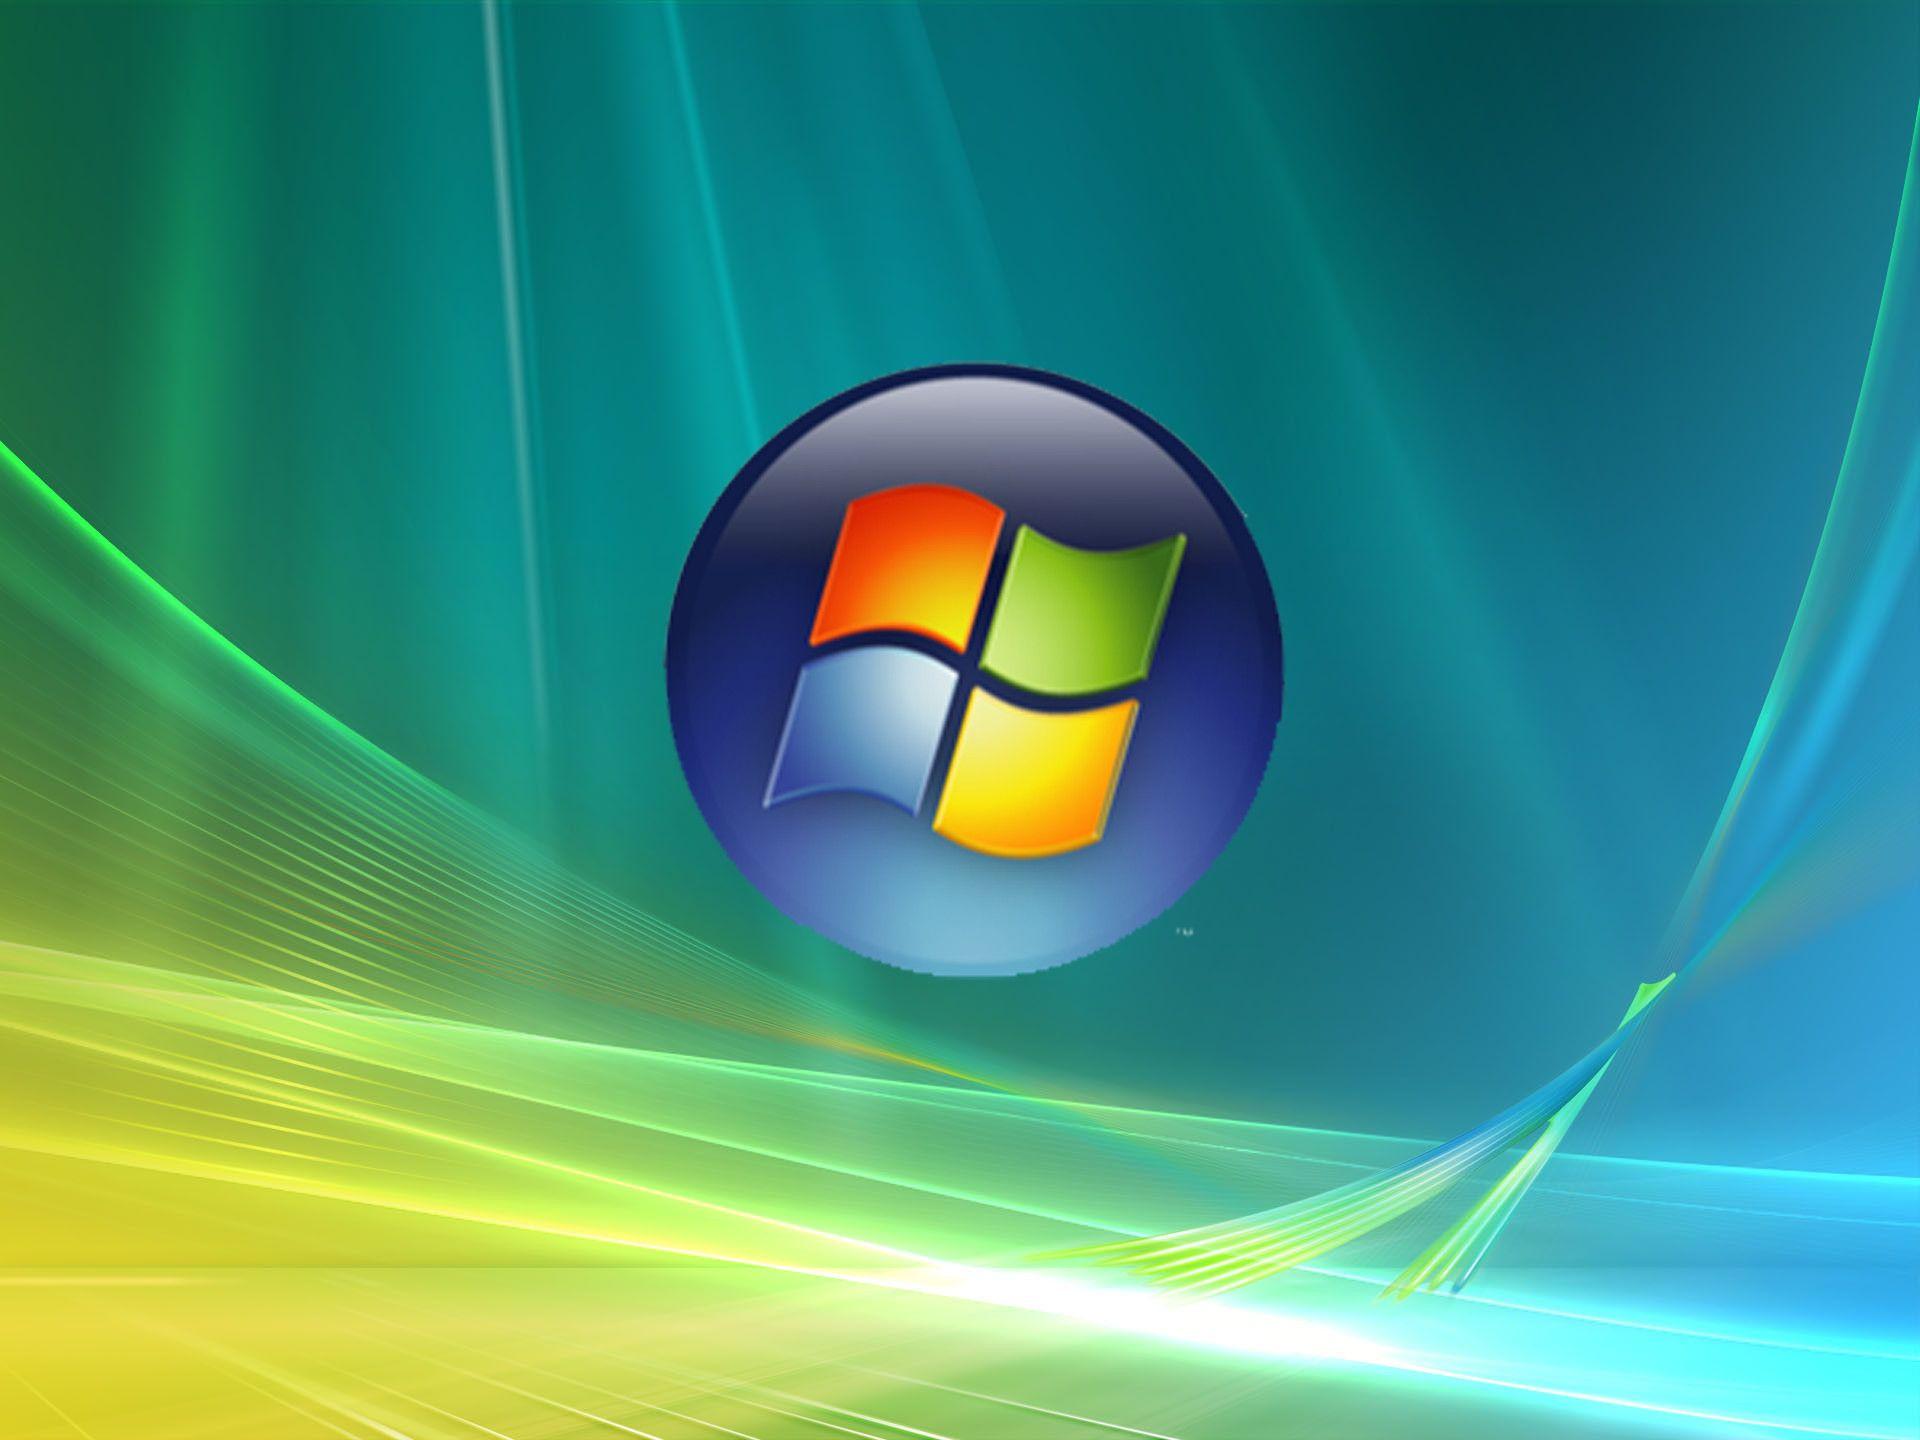 Windows Vista Logo - Microsoft Windows image Windows HD wallpaper and background photo